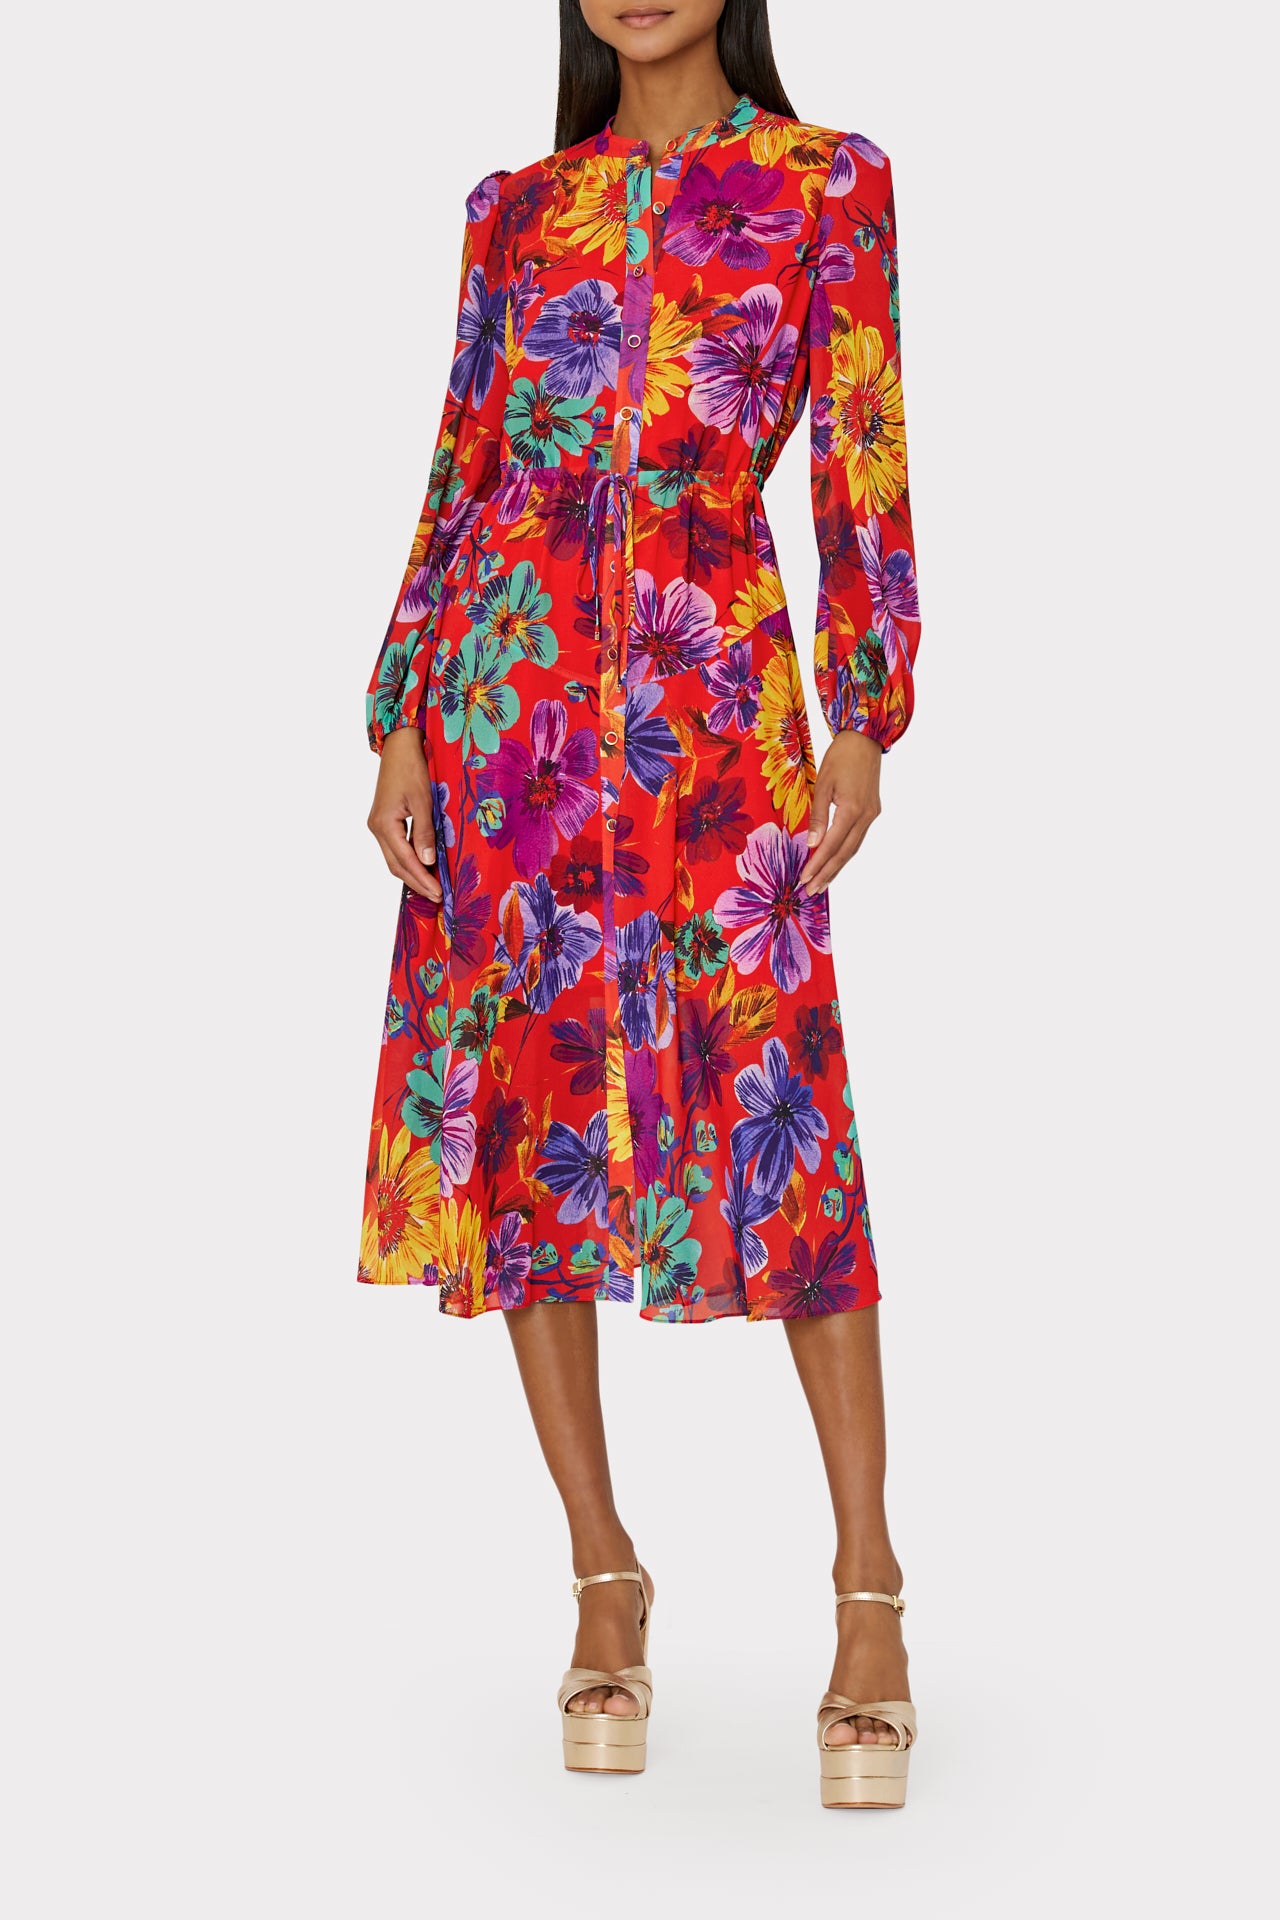 Lorian Wildflower Sheer Midi Dress in Coral | MILLY